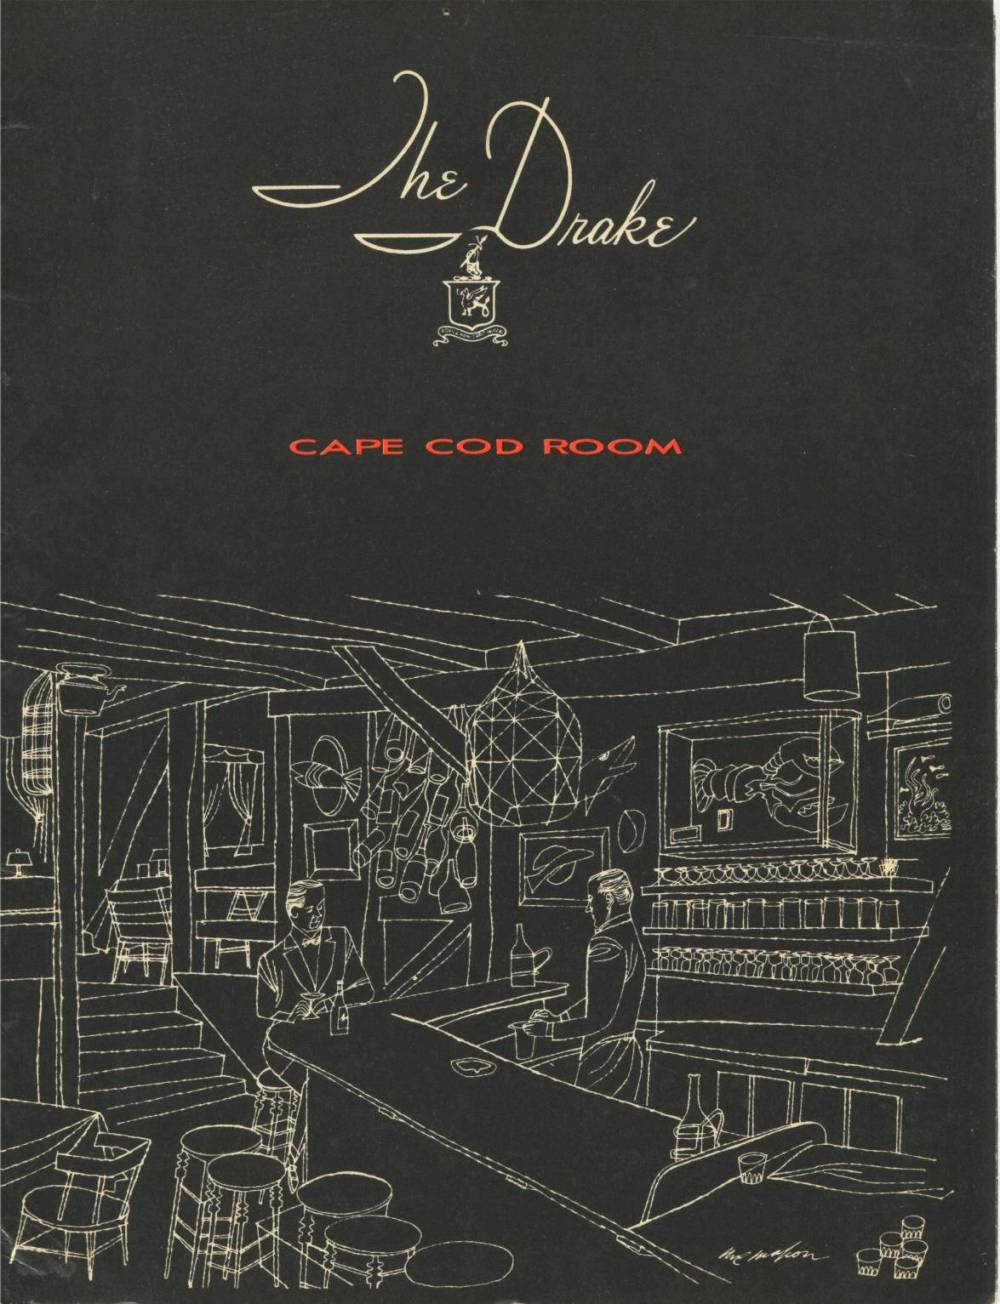 MENU - CHICAGO - DRAKE HOTEL - CAPE COD ROOM - 1955